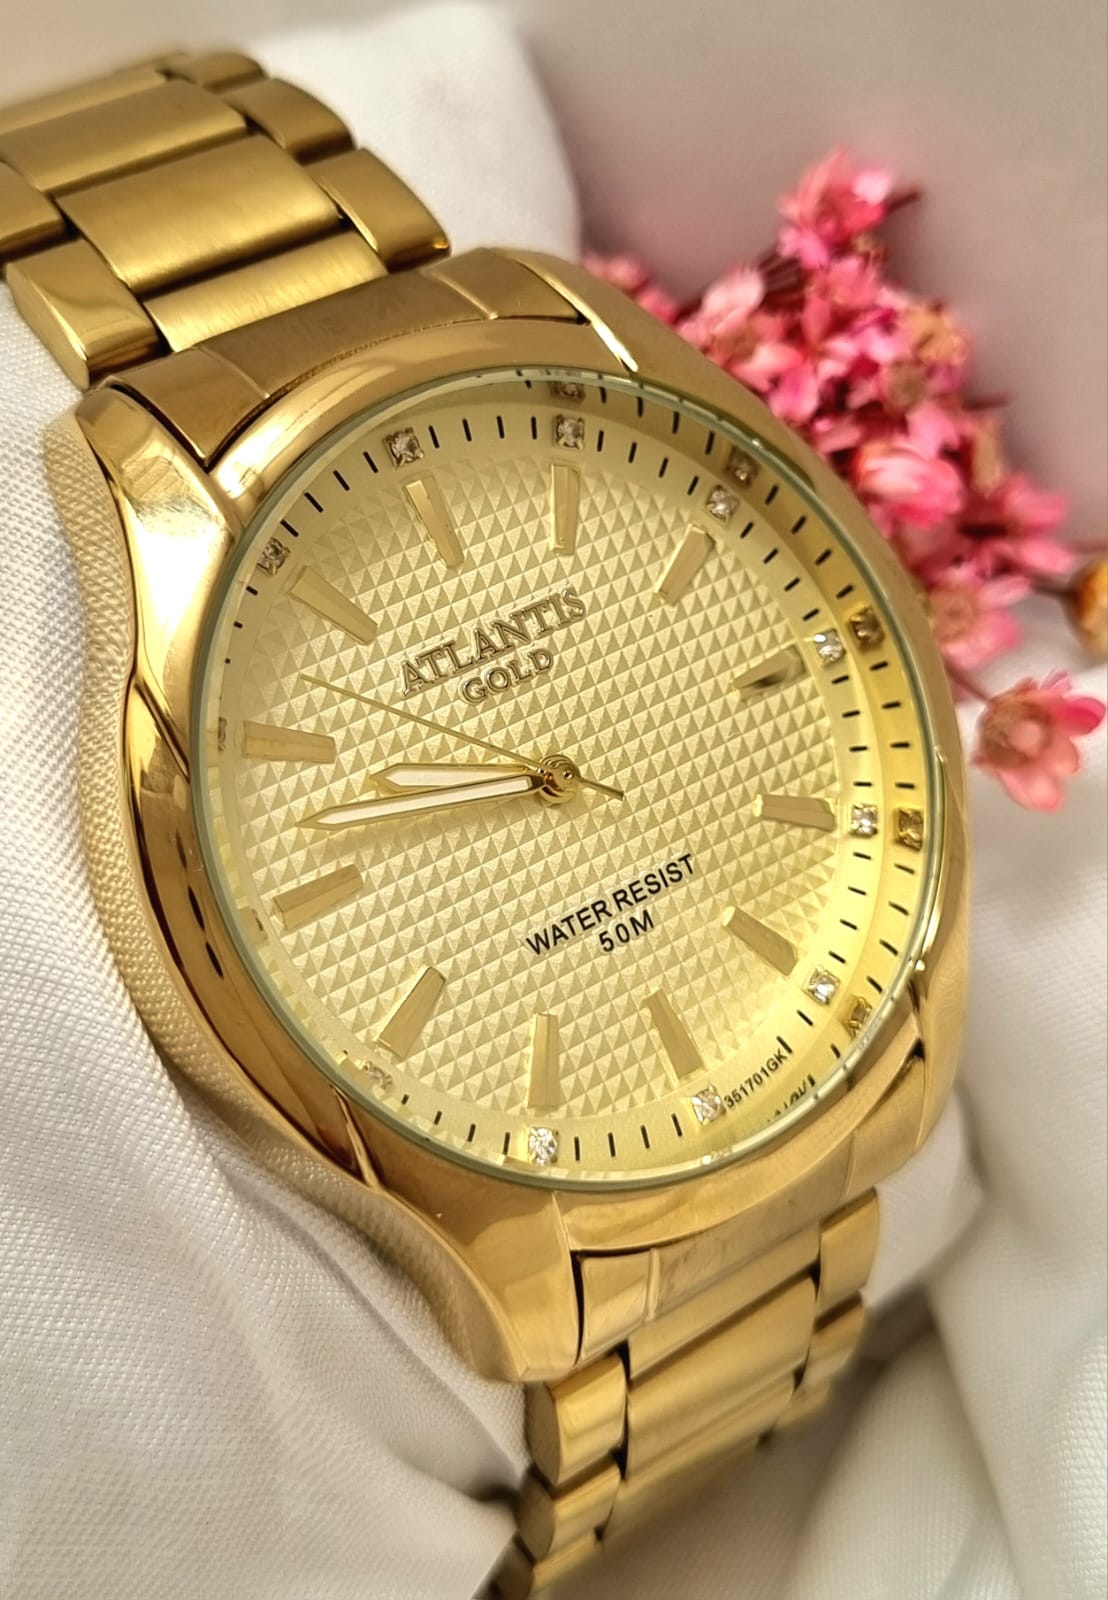 Relógio Banhado a Ouro Atlantis Gold G35172